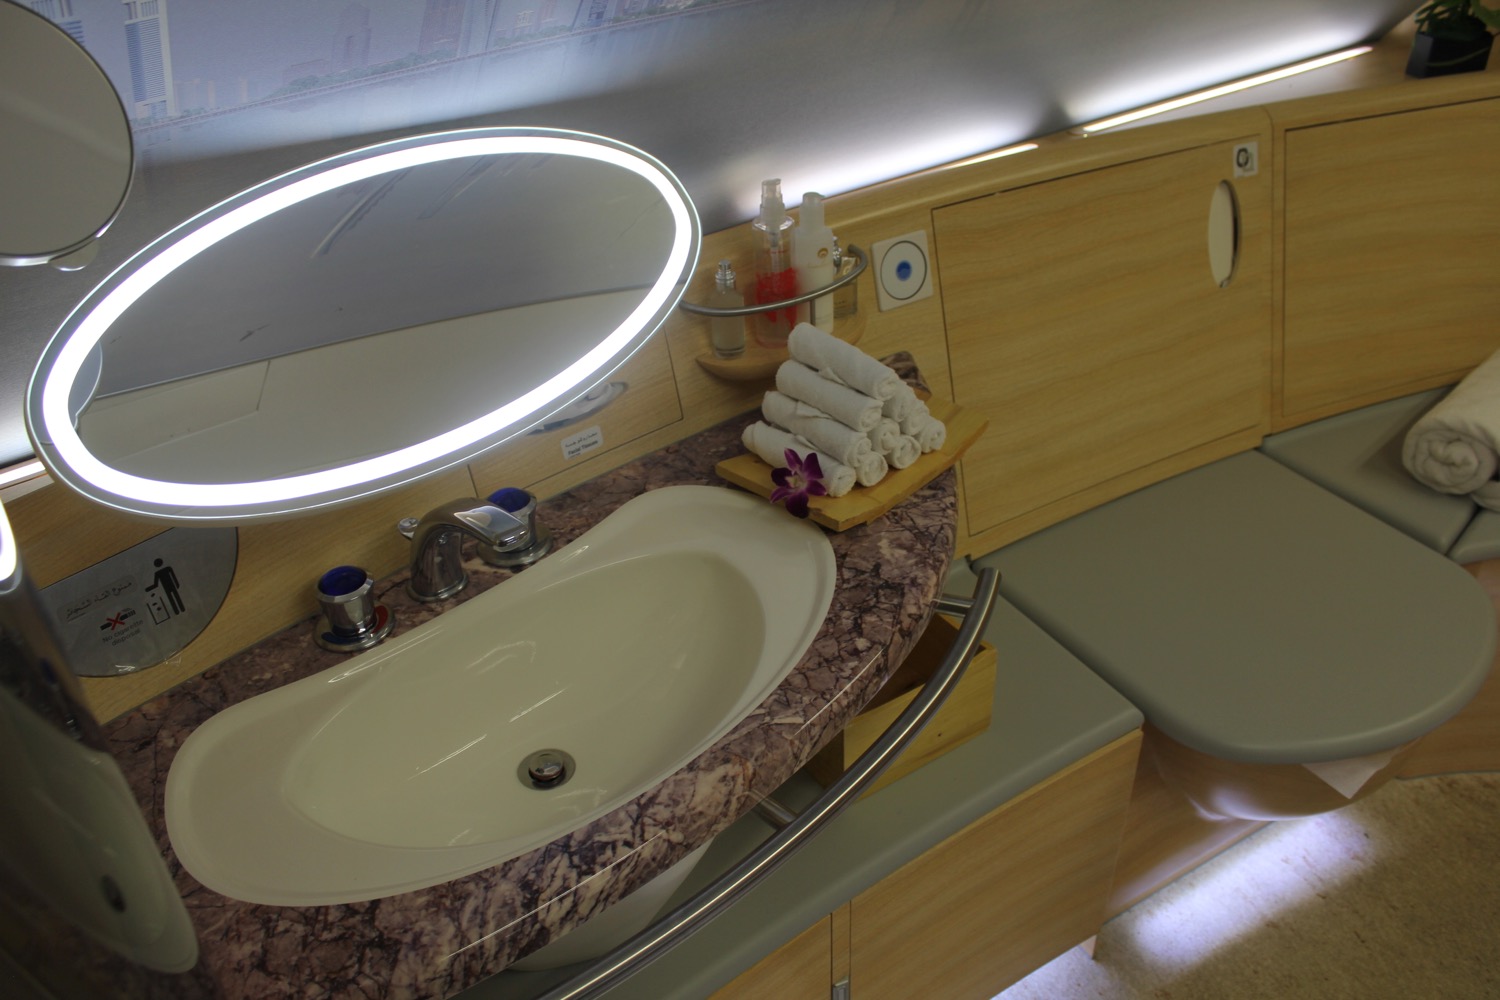 a sink with a round mirror